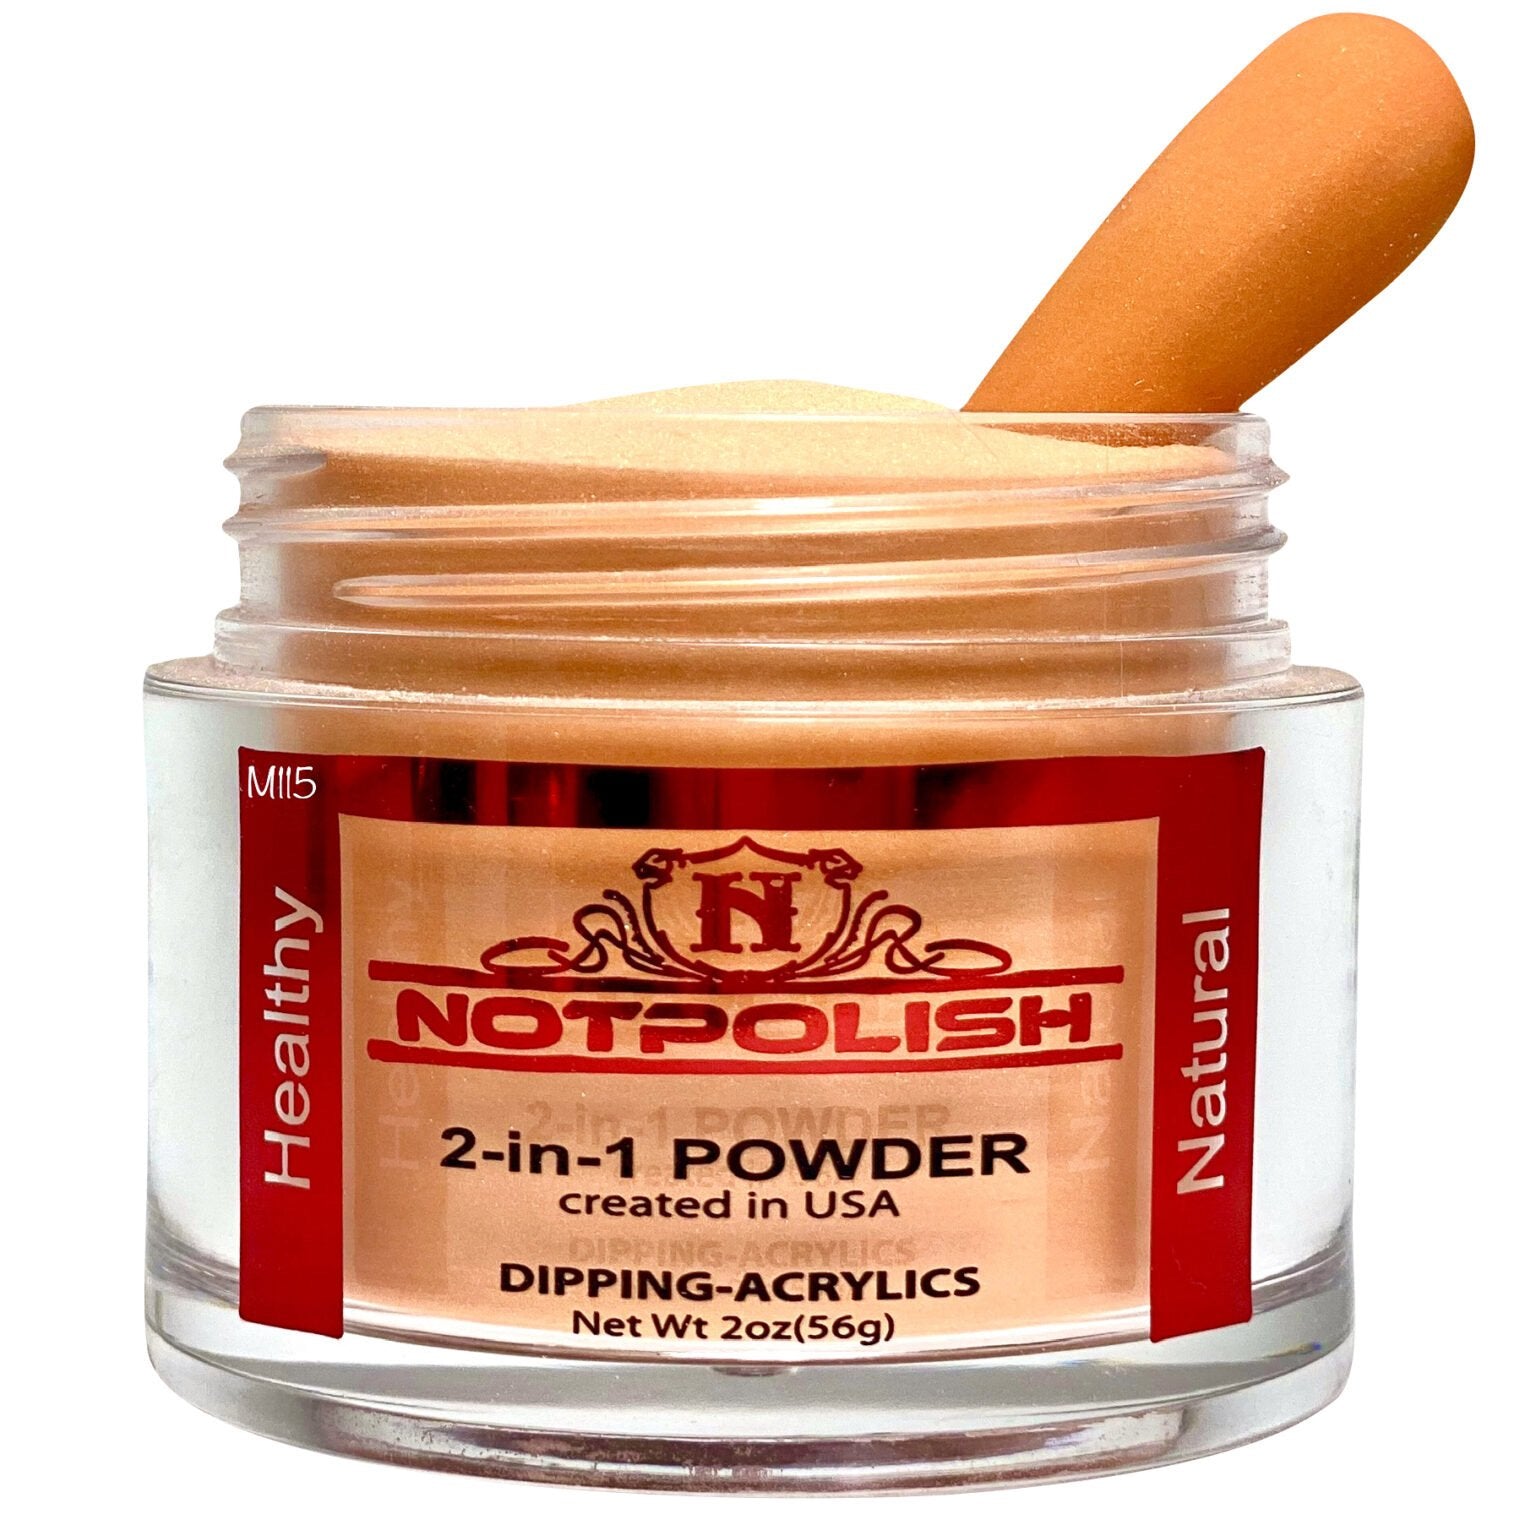 Notpolish Matching Powder M115 - Sweet Treat